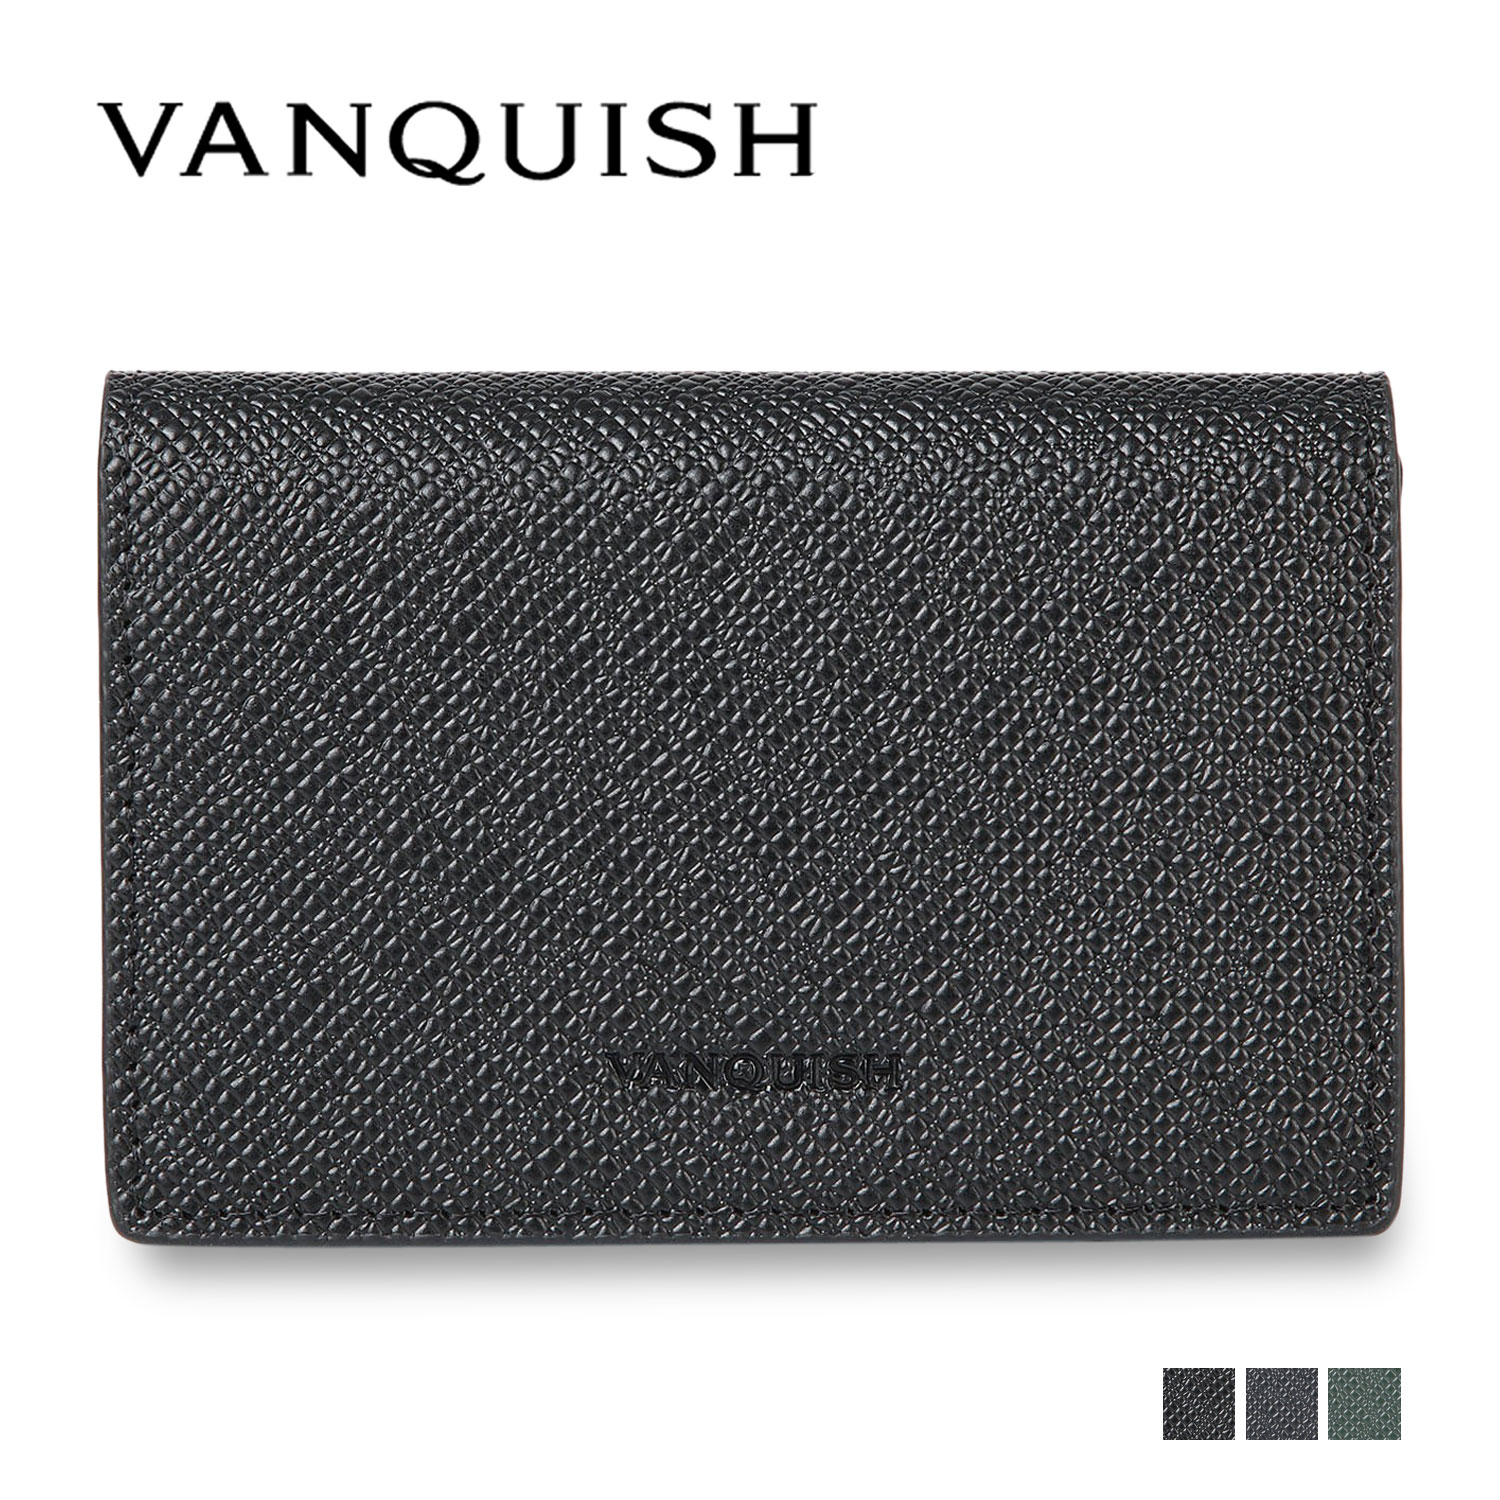 VANQUISH CARD CASE ヴァンキッシュ カードケース 名刺入れ 定期入れ メンズ 本革 ブラック ネイビー ダーク グリーン 黒 43320